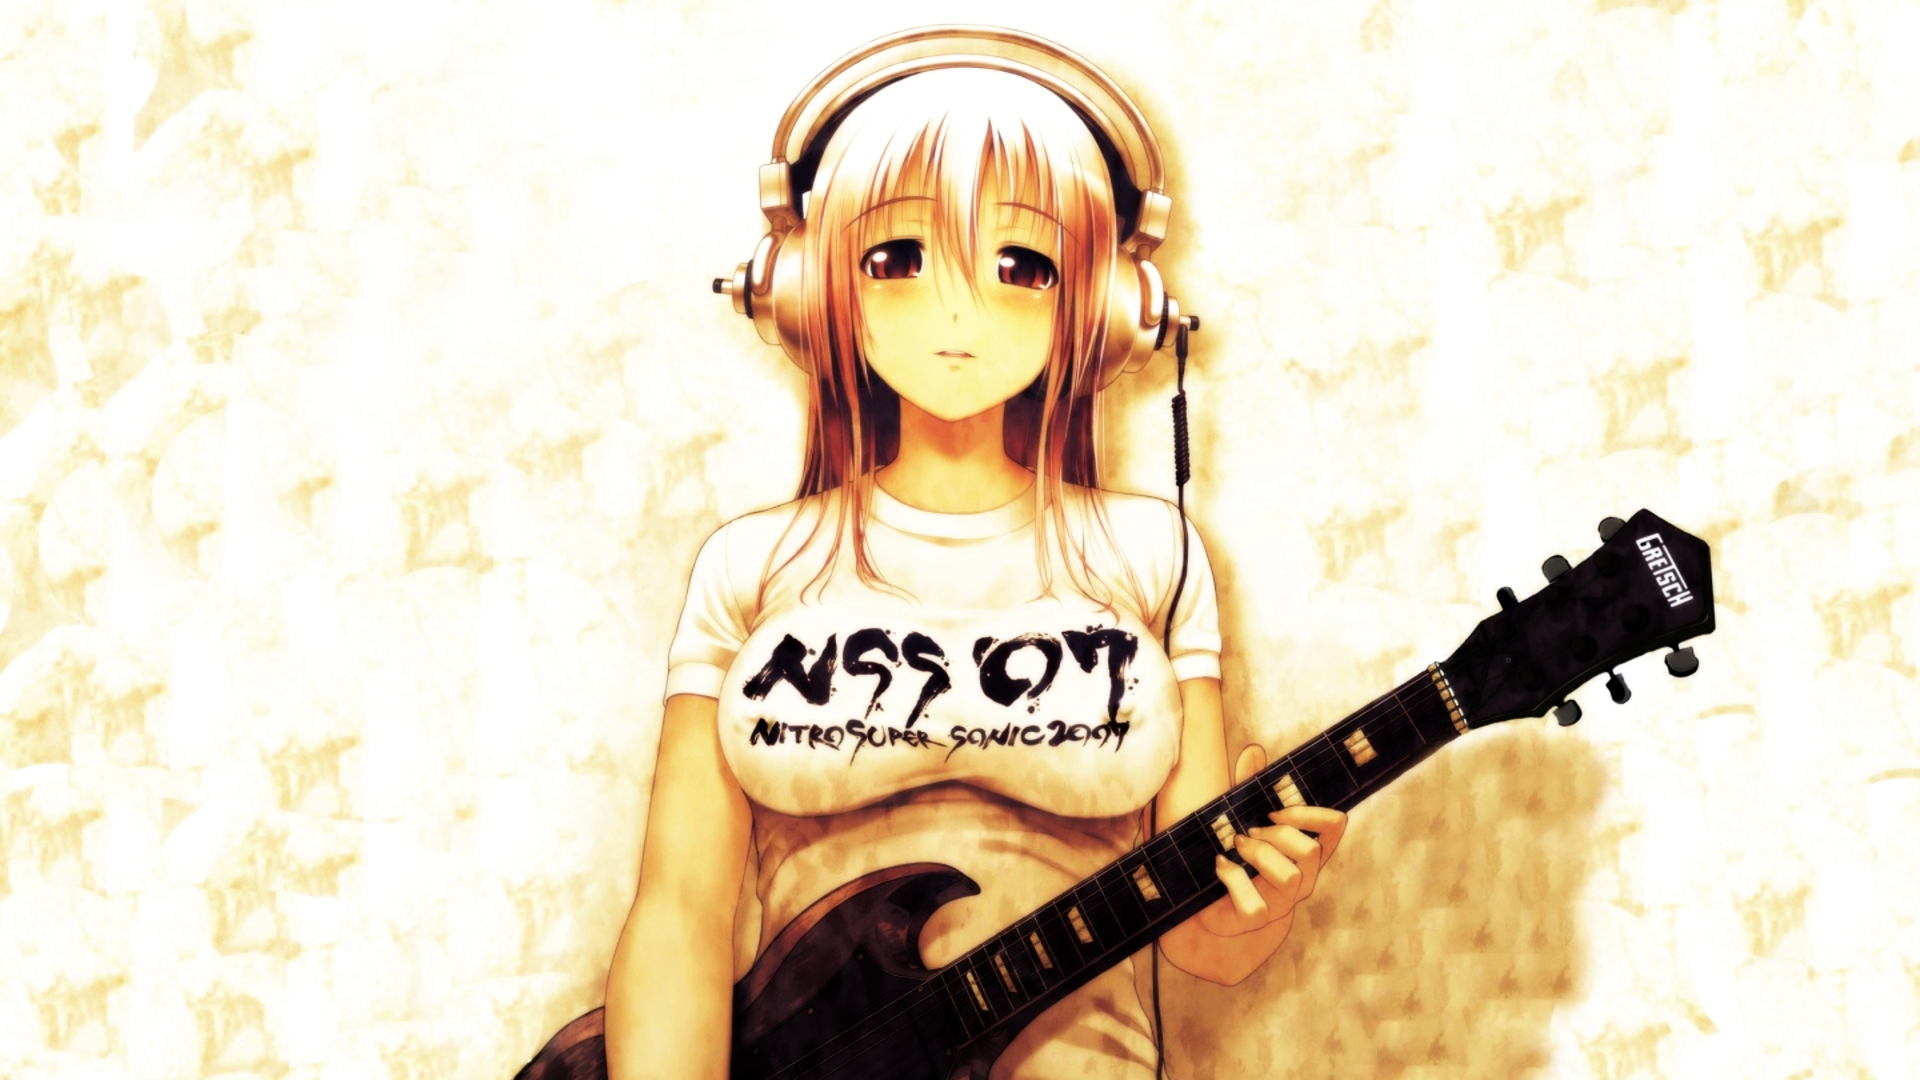 headphones, blondes, guitars, Nitroplus, Super Sonico, anime girls, Tsuji Santa - desktop wallpaper